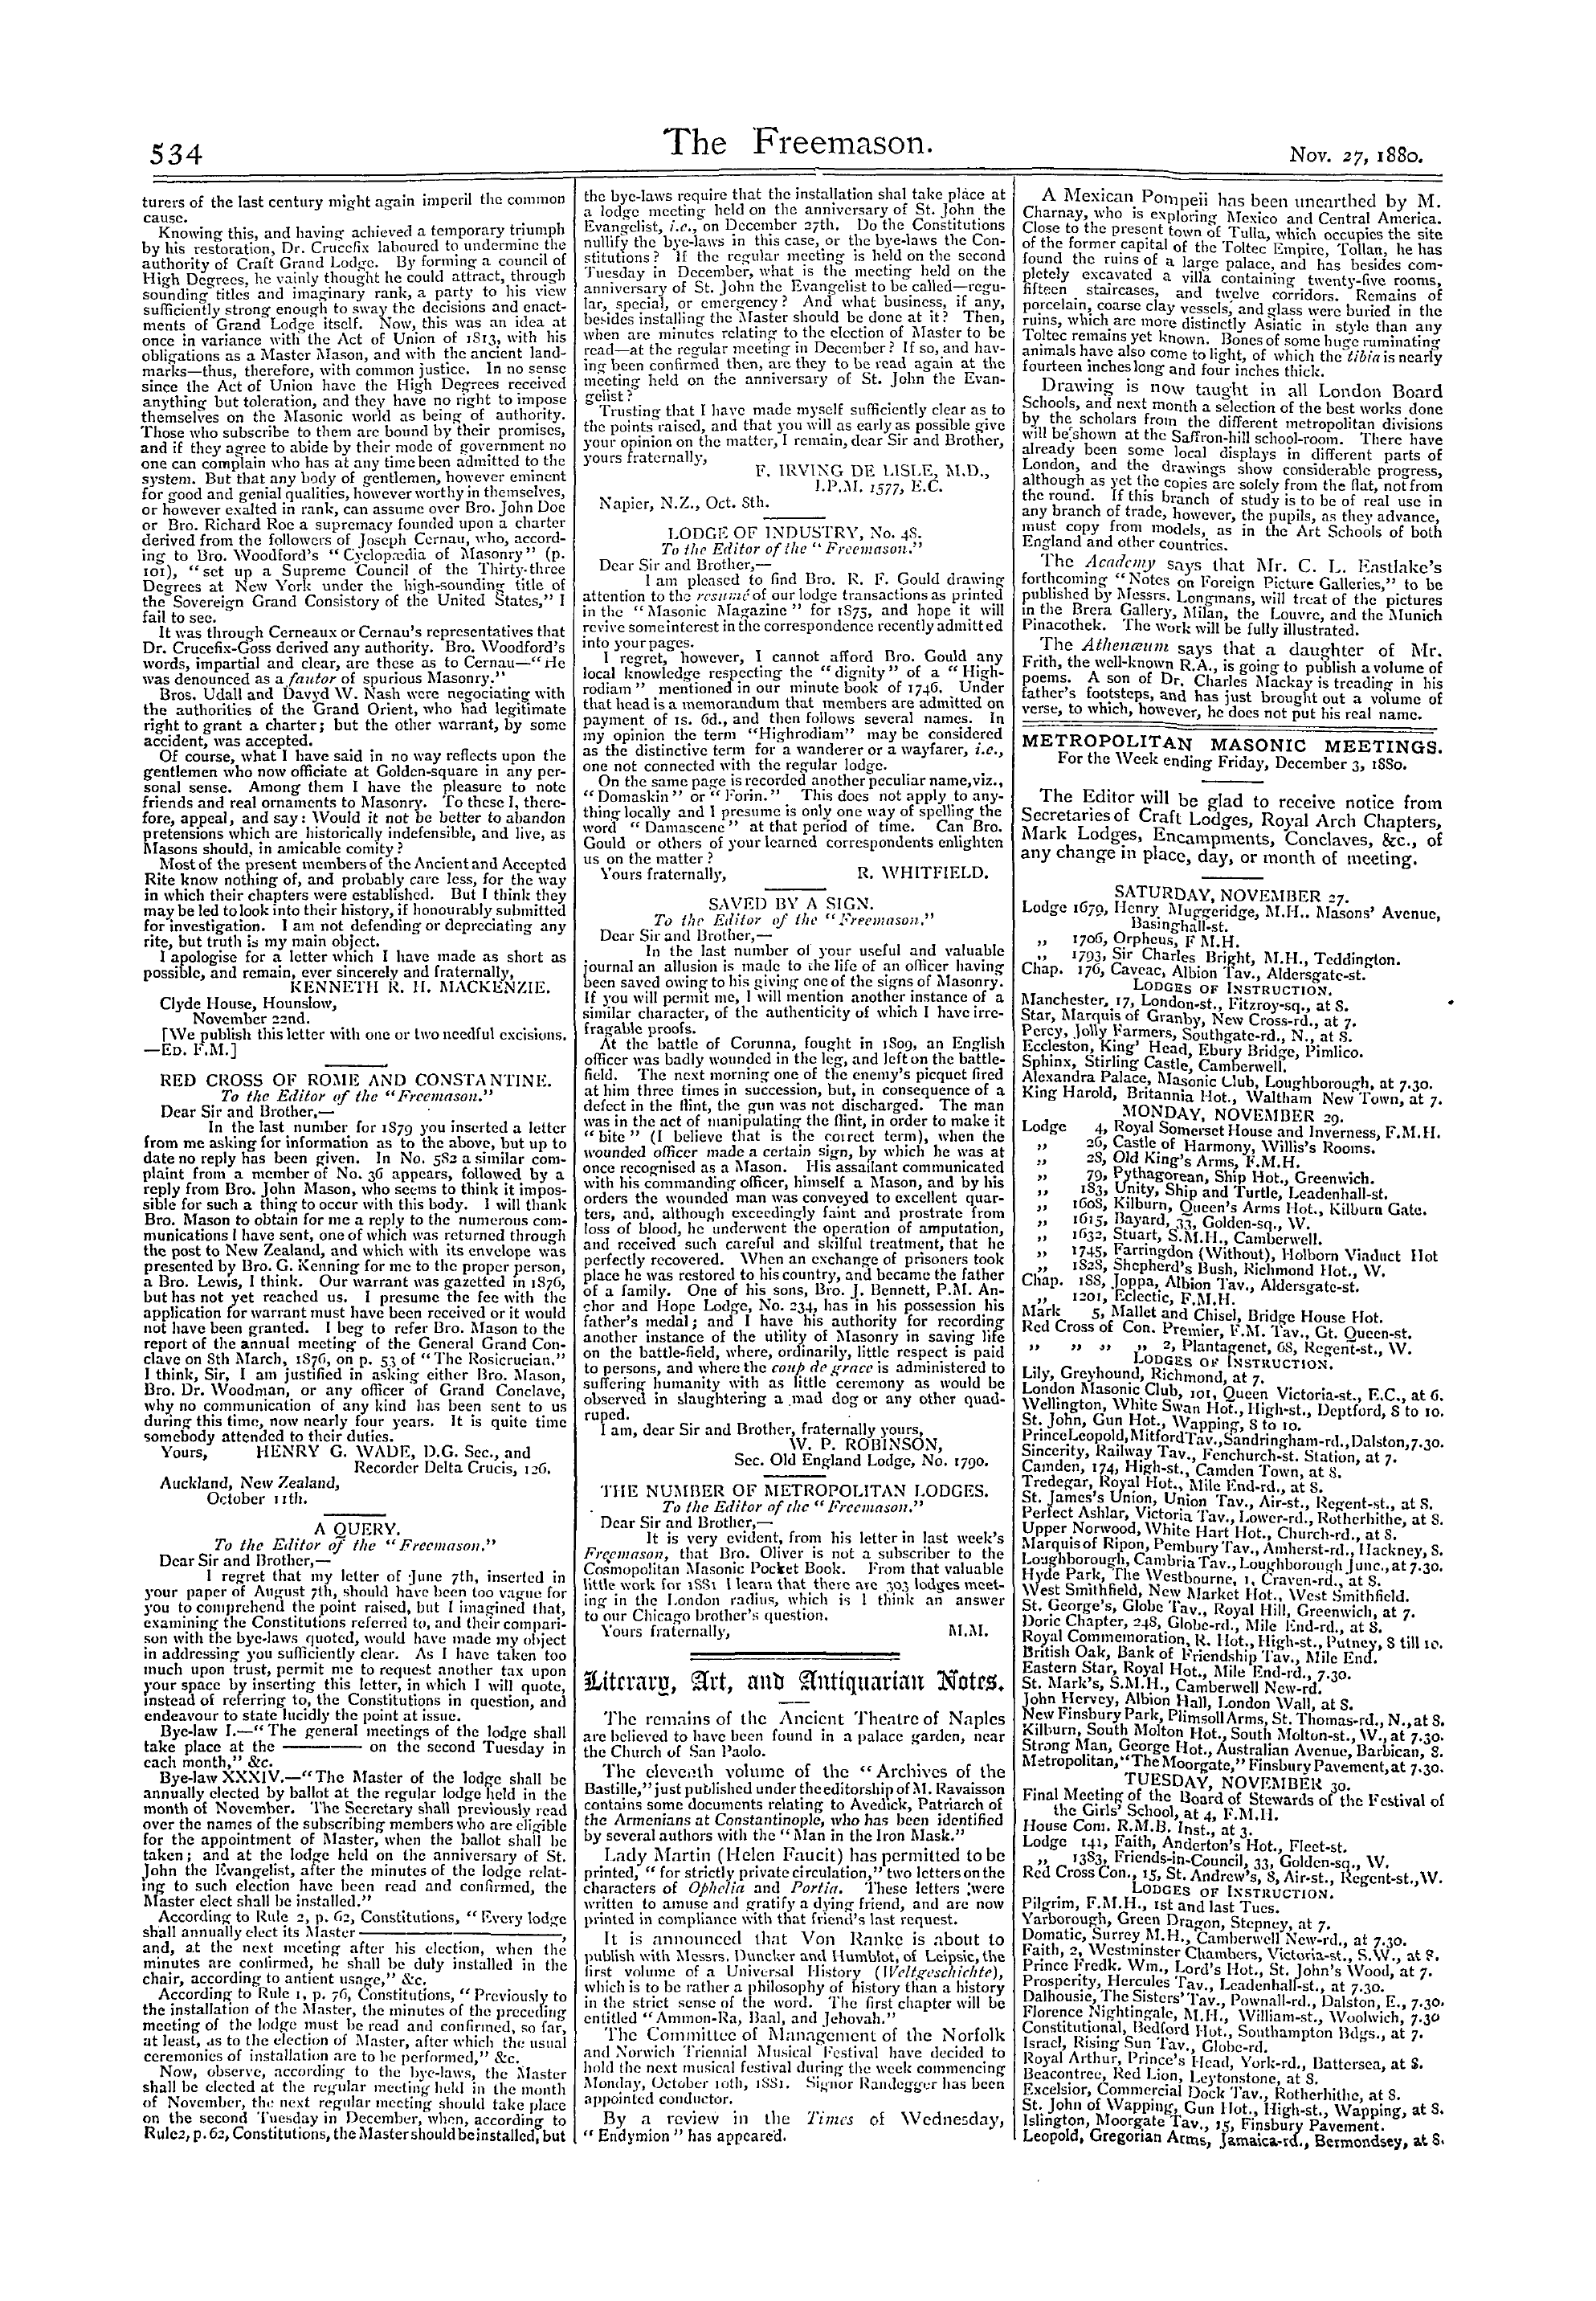 The Freemason: 1880-11-27 - Original Correspondece.